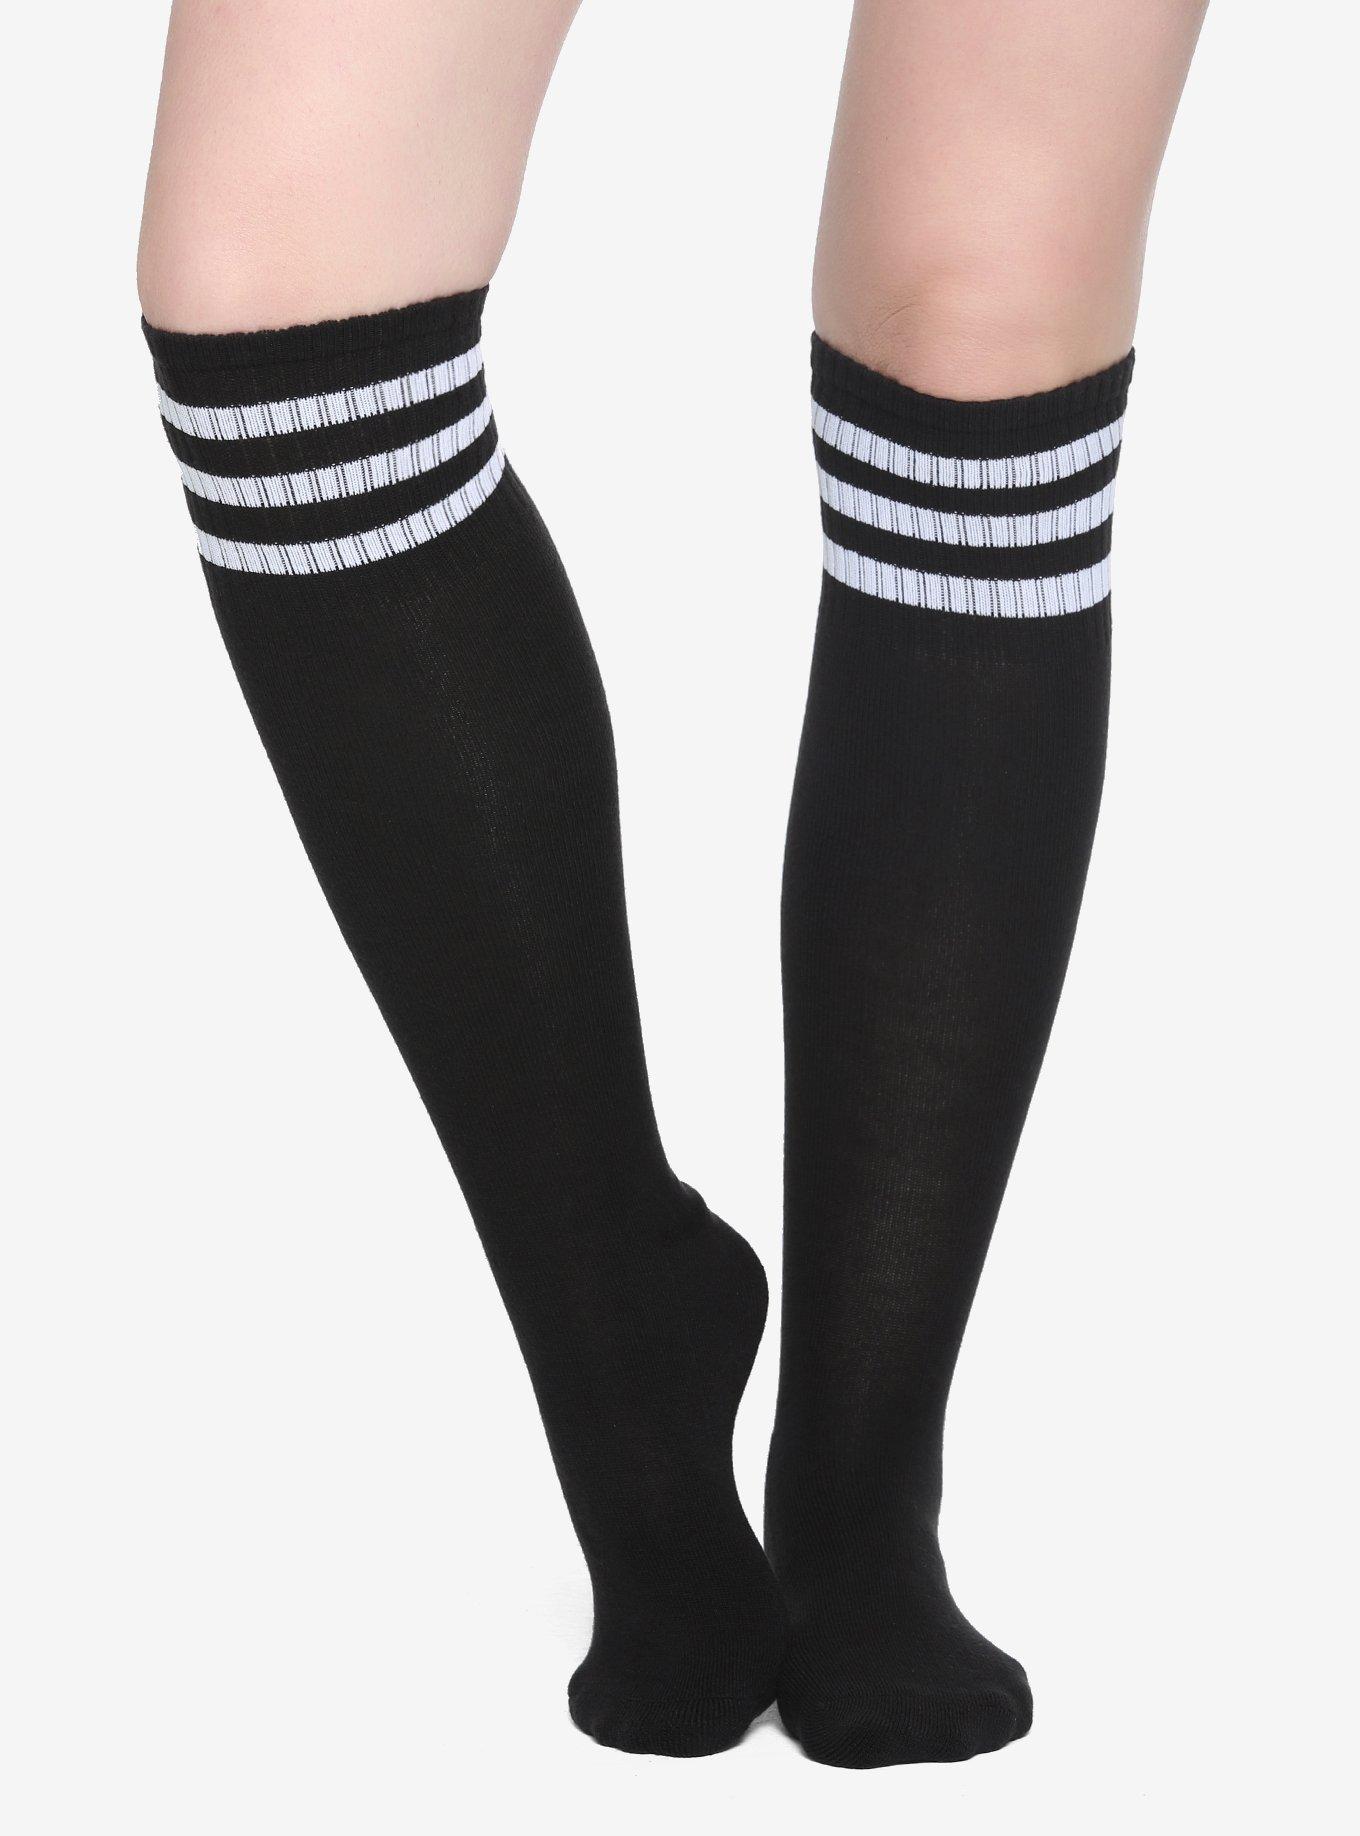 Rainbow Toe Socks  Fun Five-Toe Socks With Rainbow Stripes - Cute But  Crazy Socks